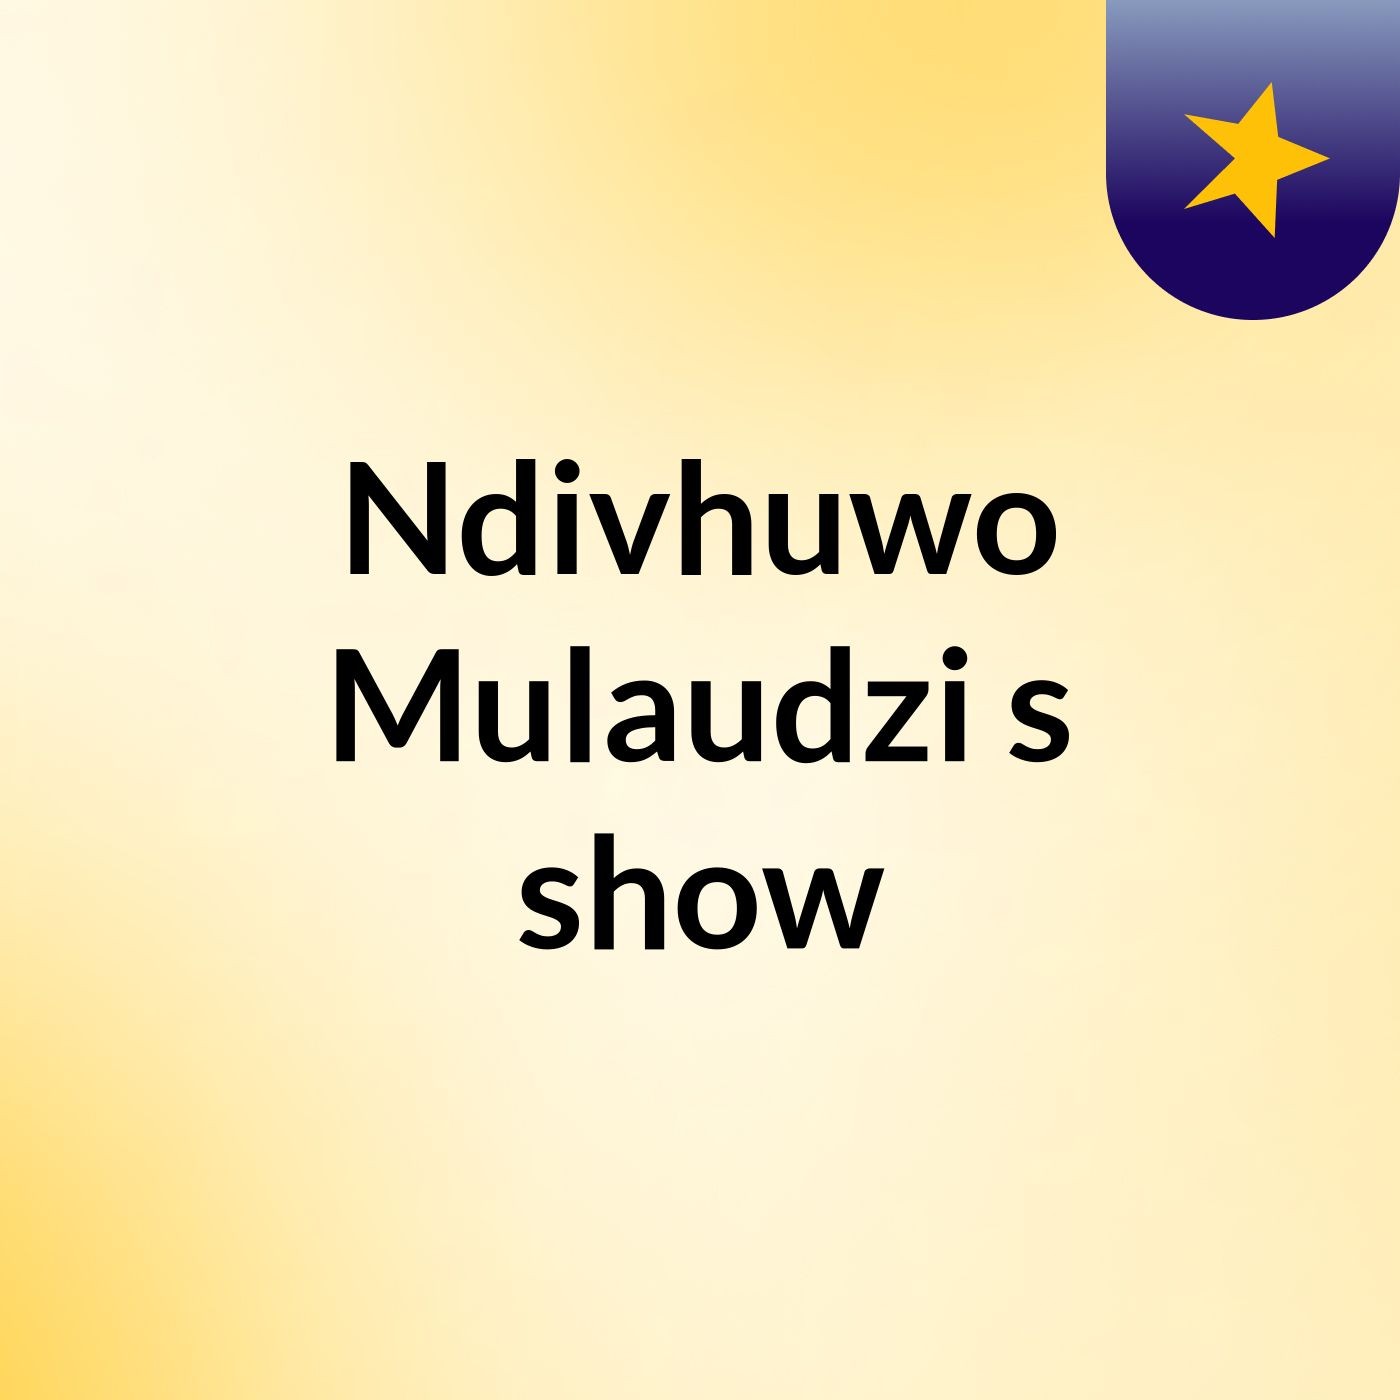 Ndivhuwo Mulaudzi's show